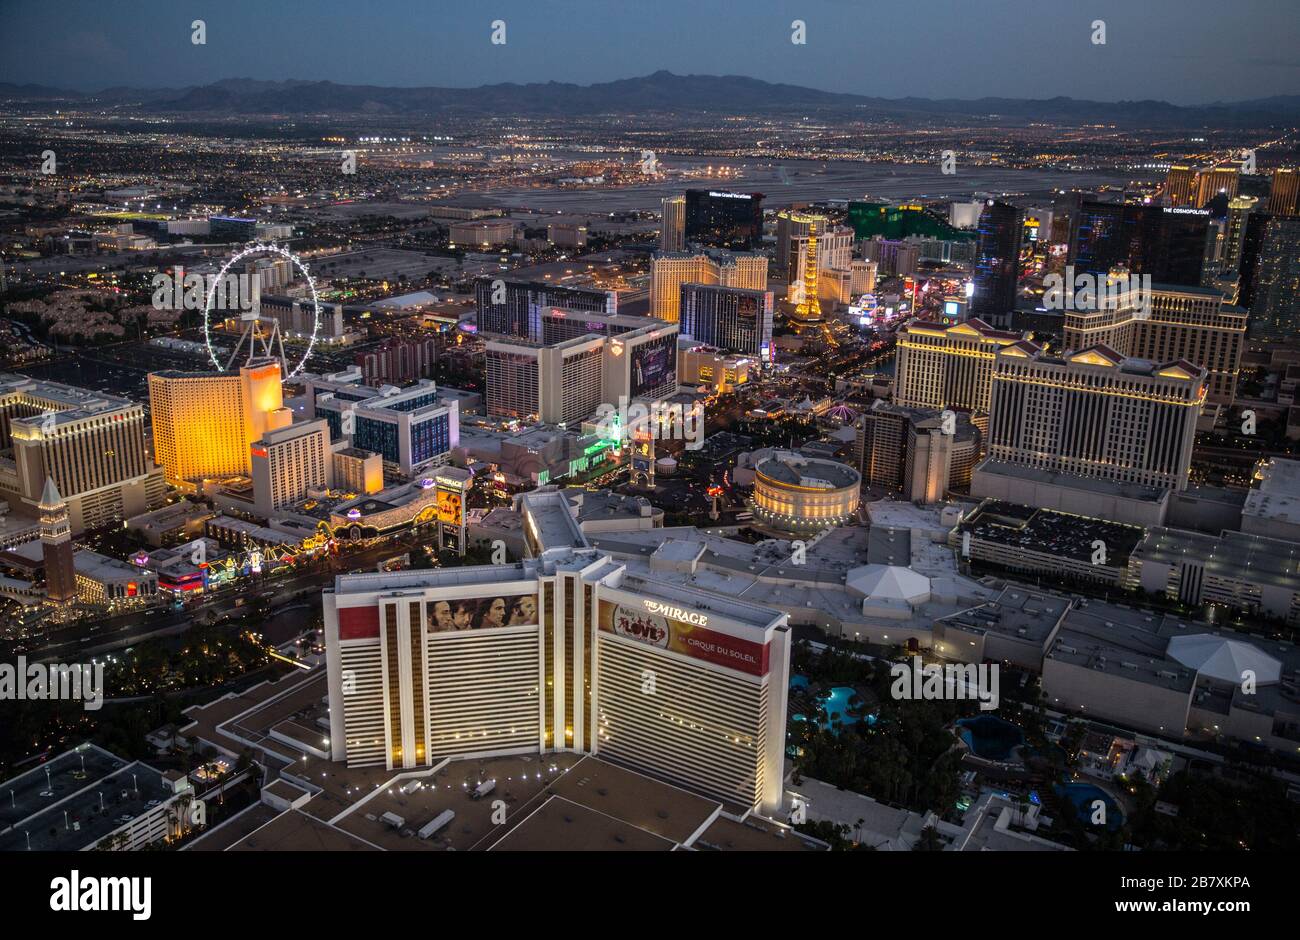 Views of Las Vegas, USA and the surrounding area. Credit: Charlie Raven/Alamy Stock Photo